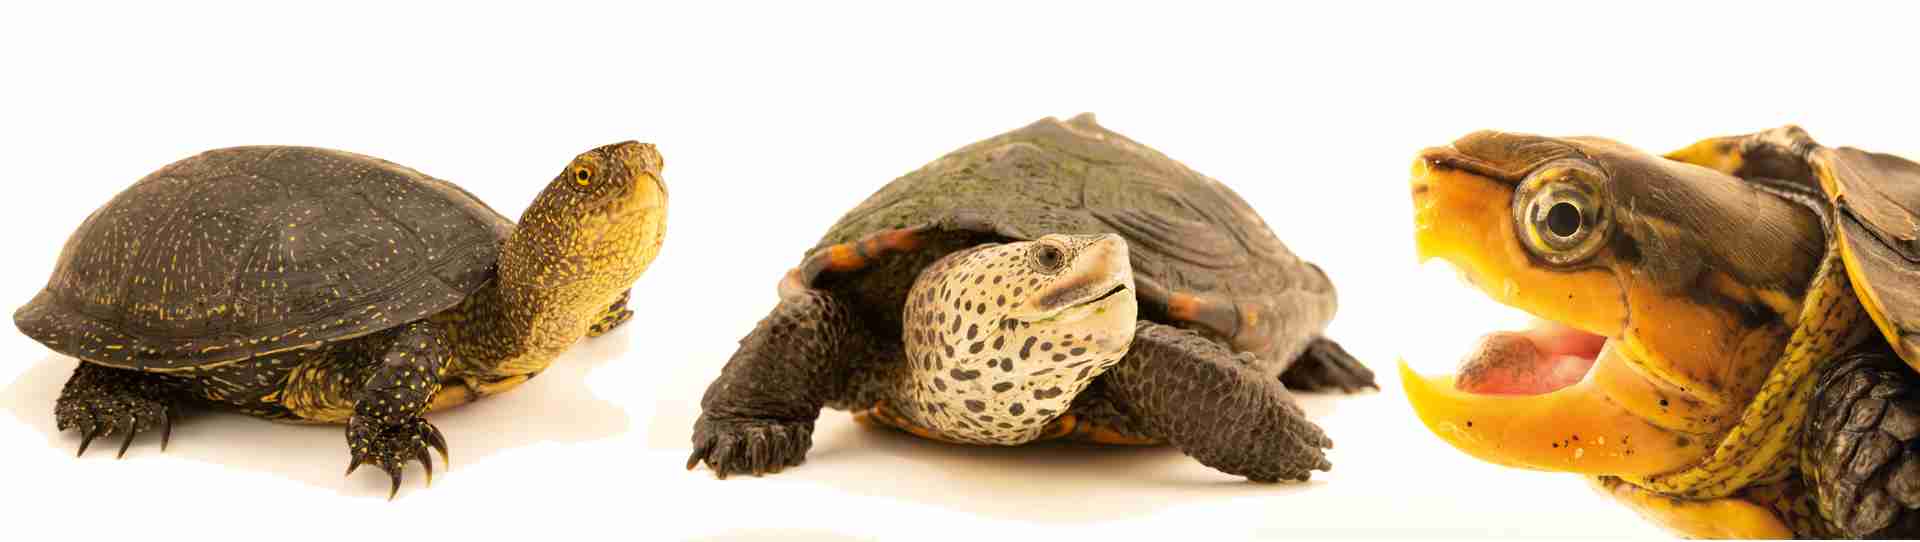 Protecting endangered species Turtle Island